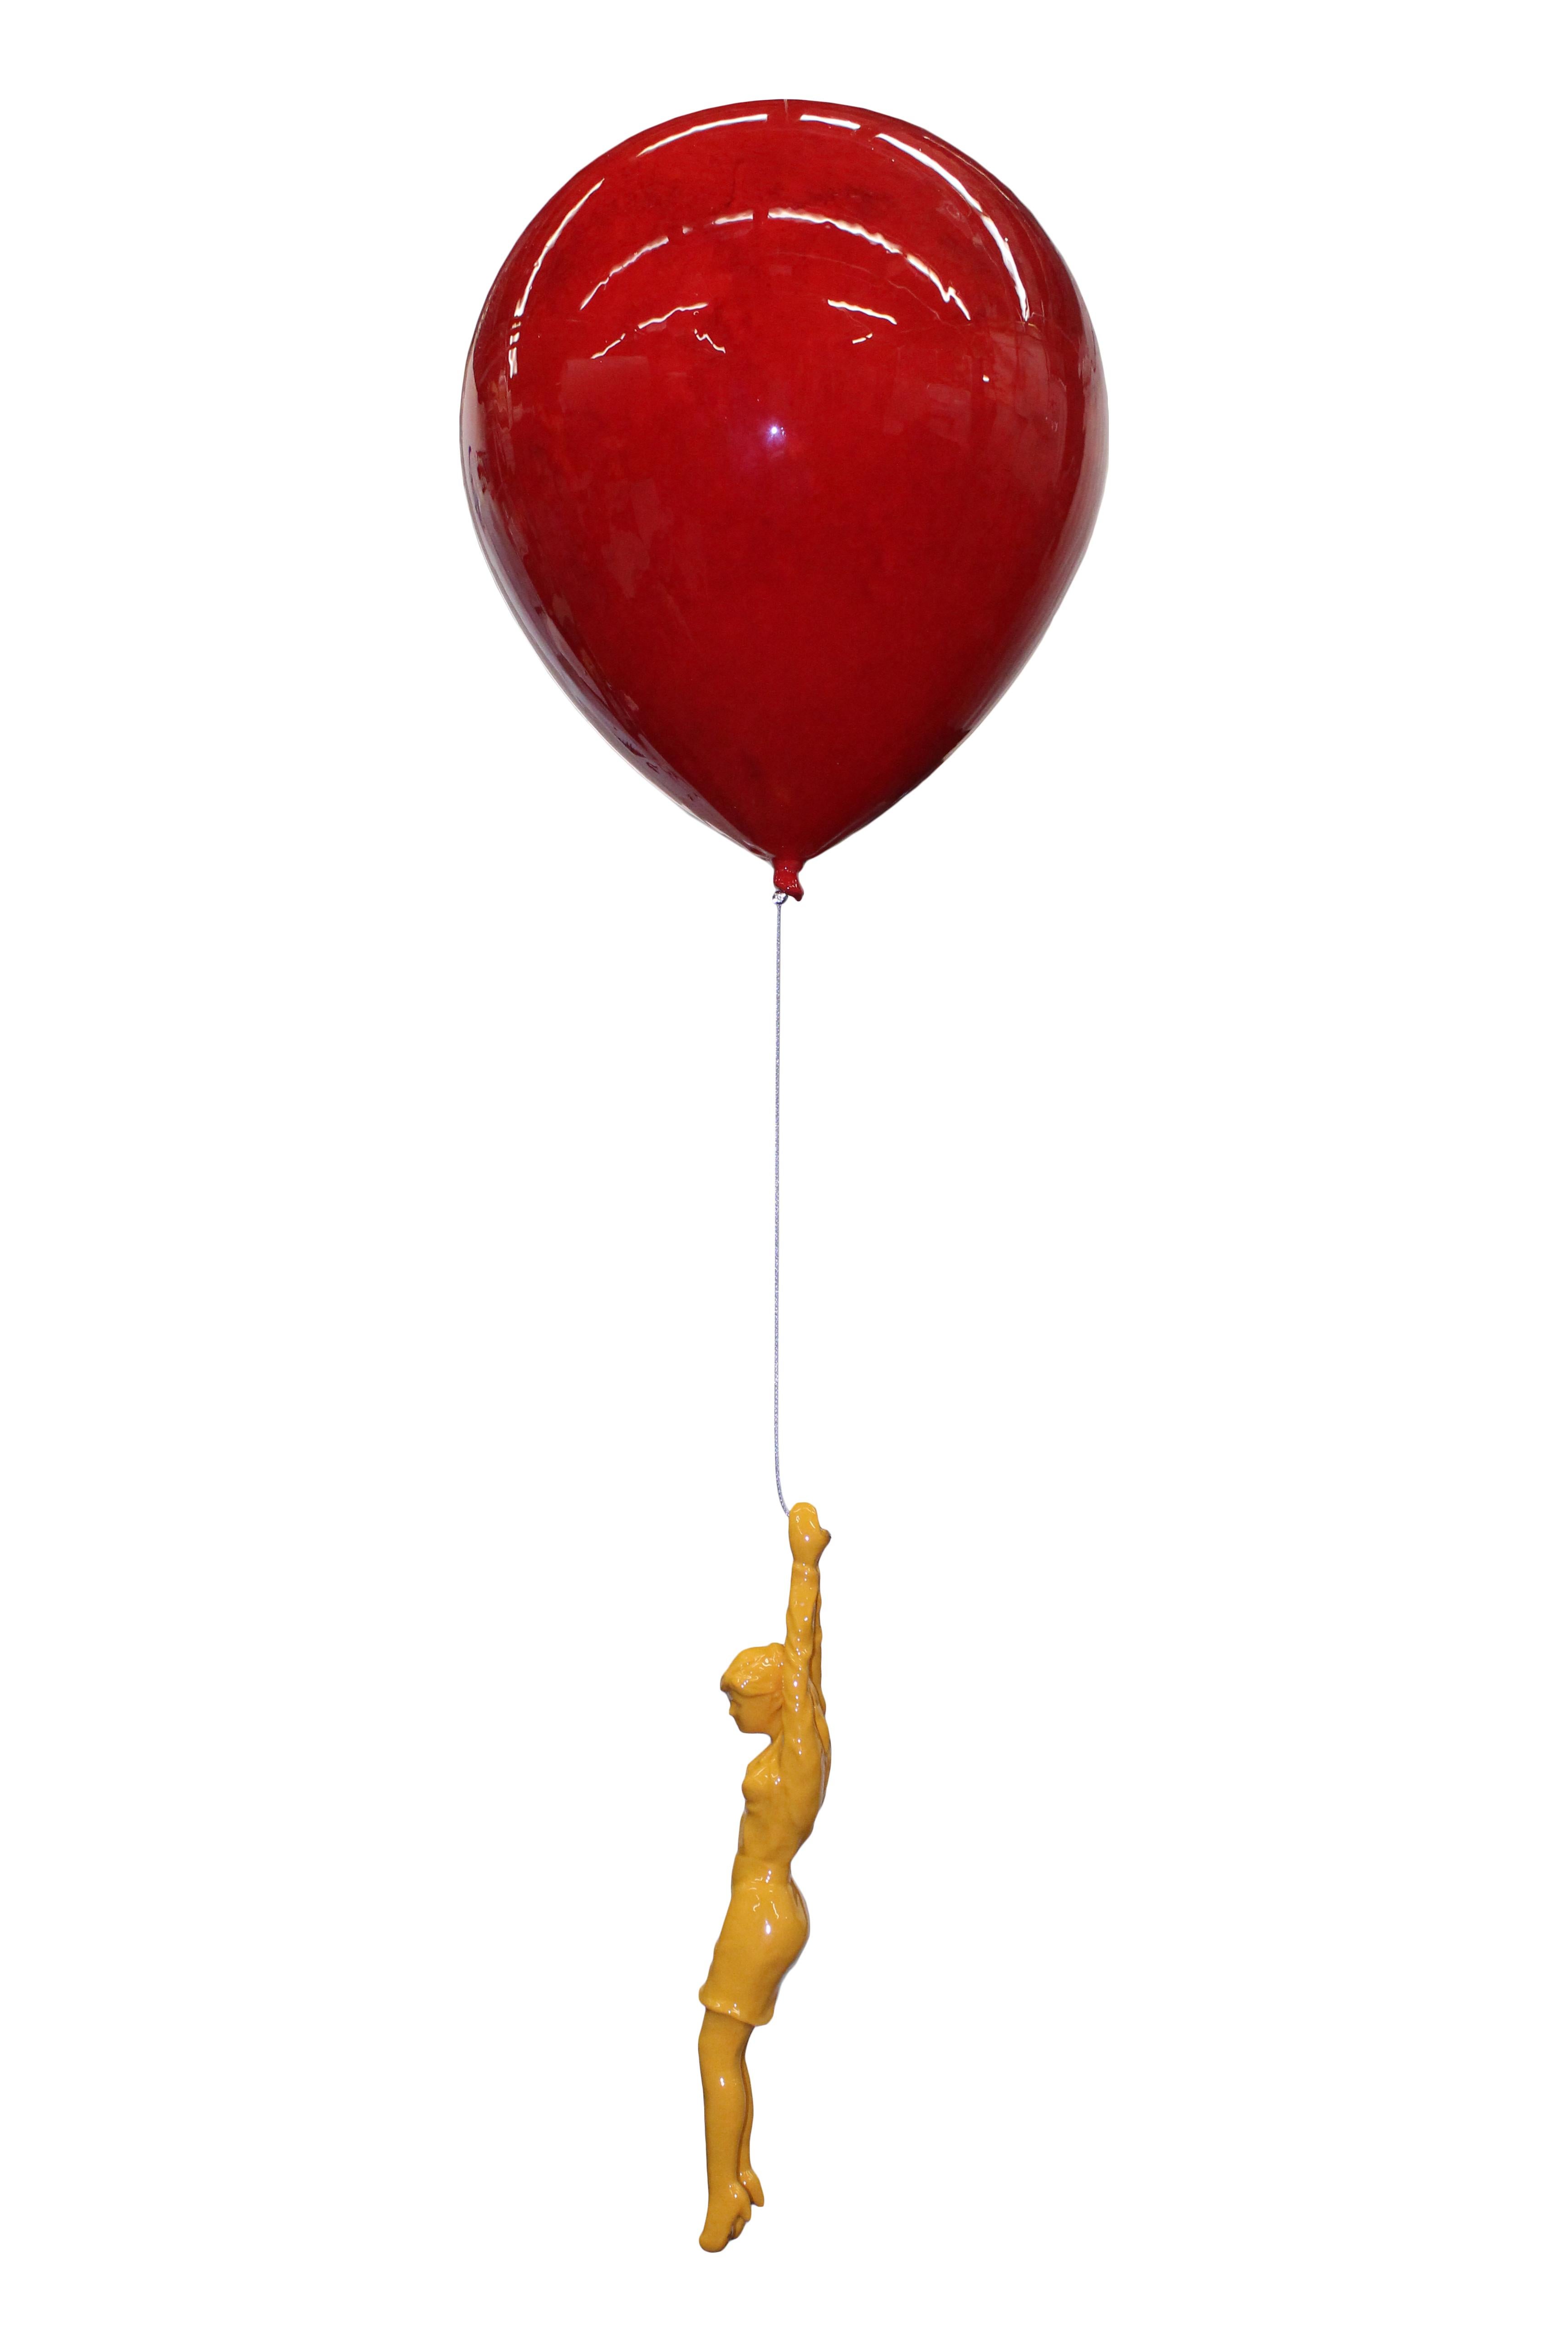 Ancizar Marin Figurative Sculpture - Lady with a Balloon, Resin